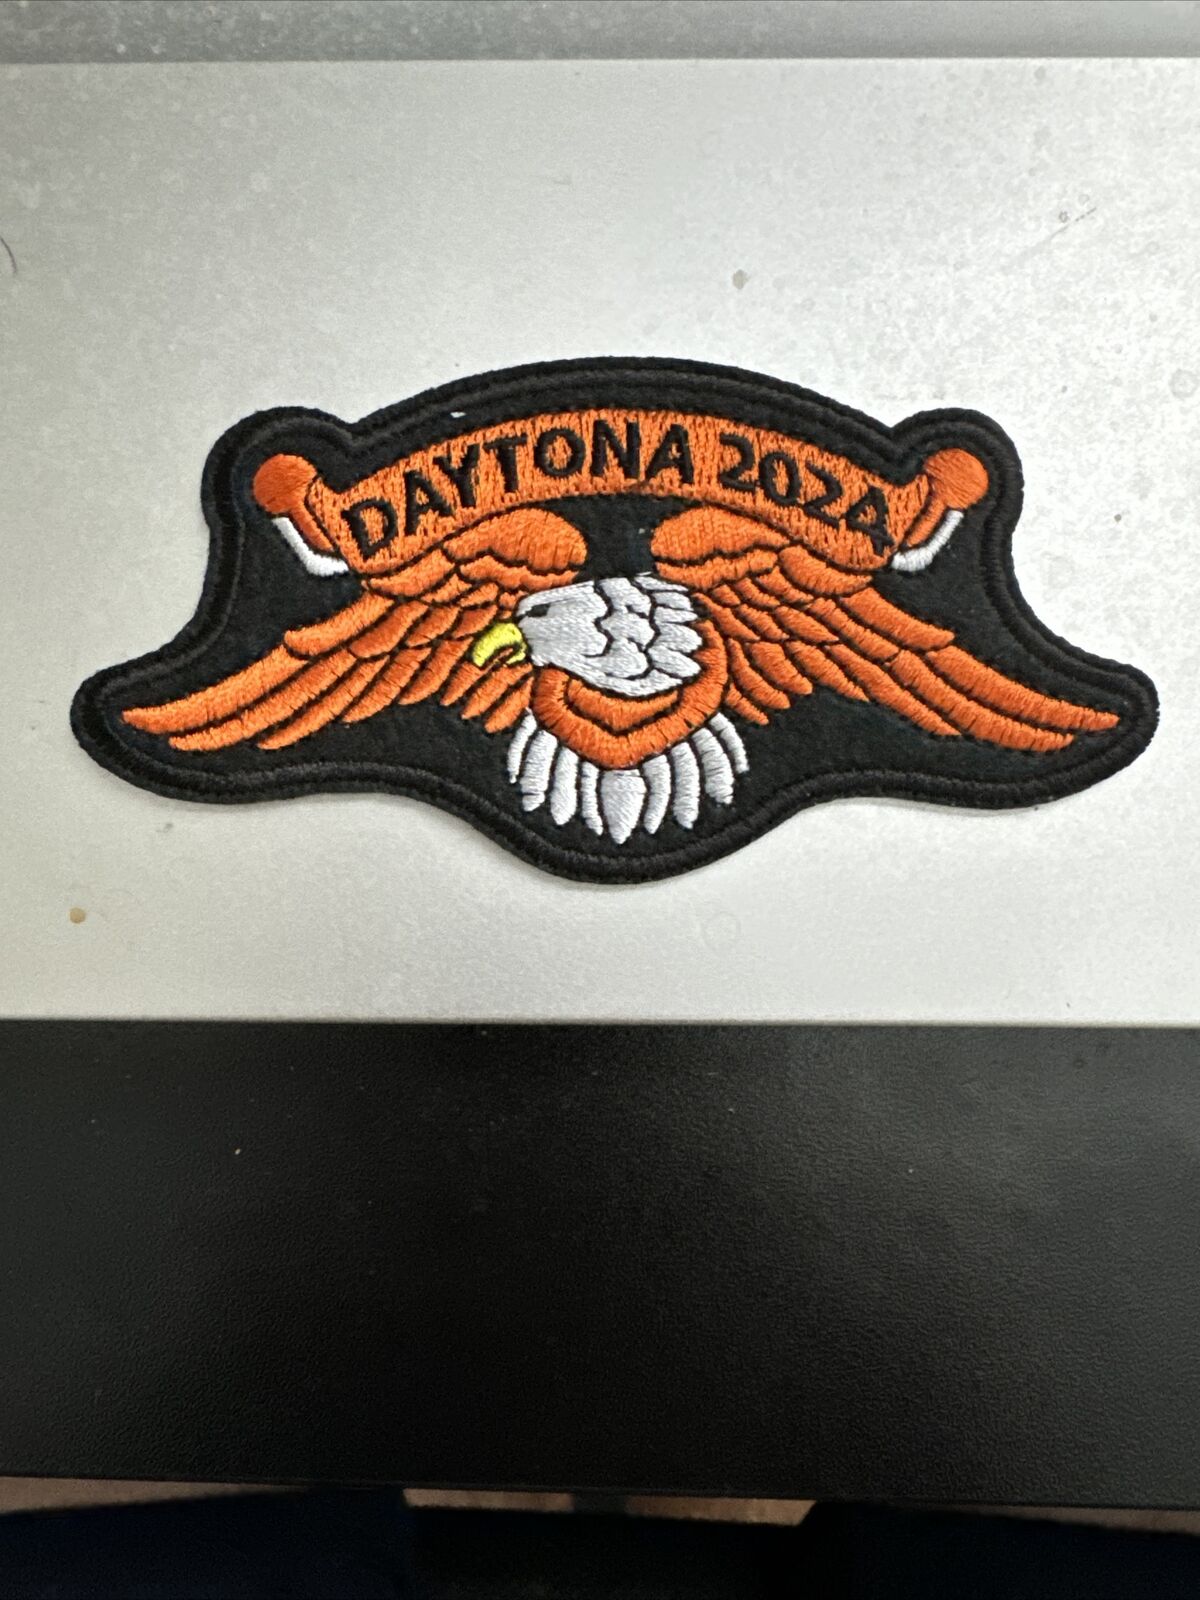 Daytona Bike Week Patch